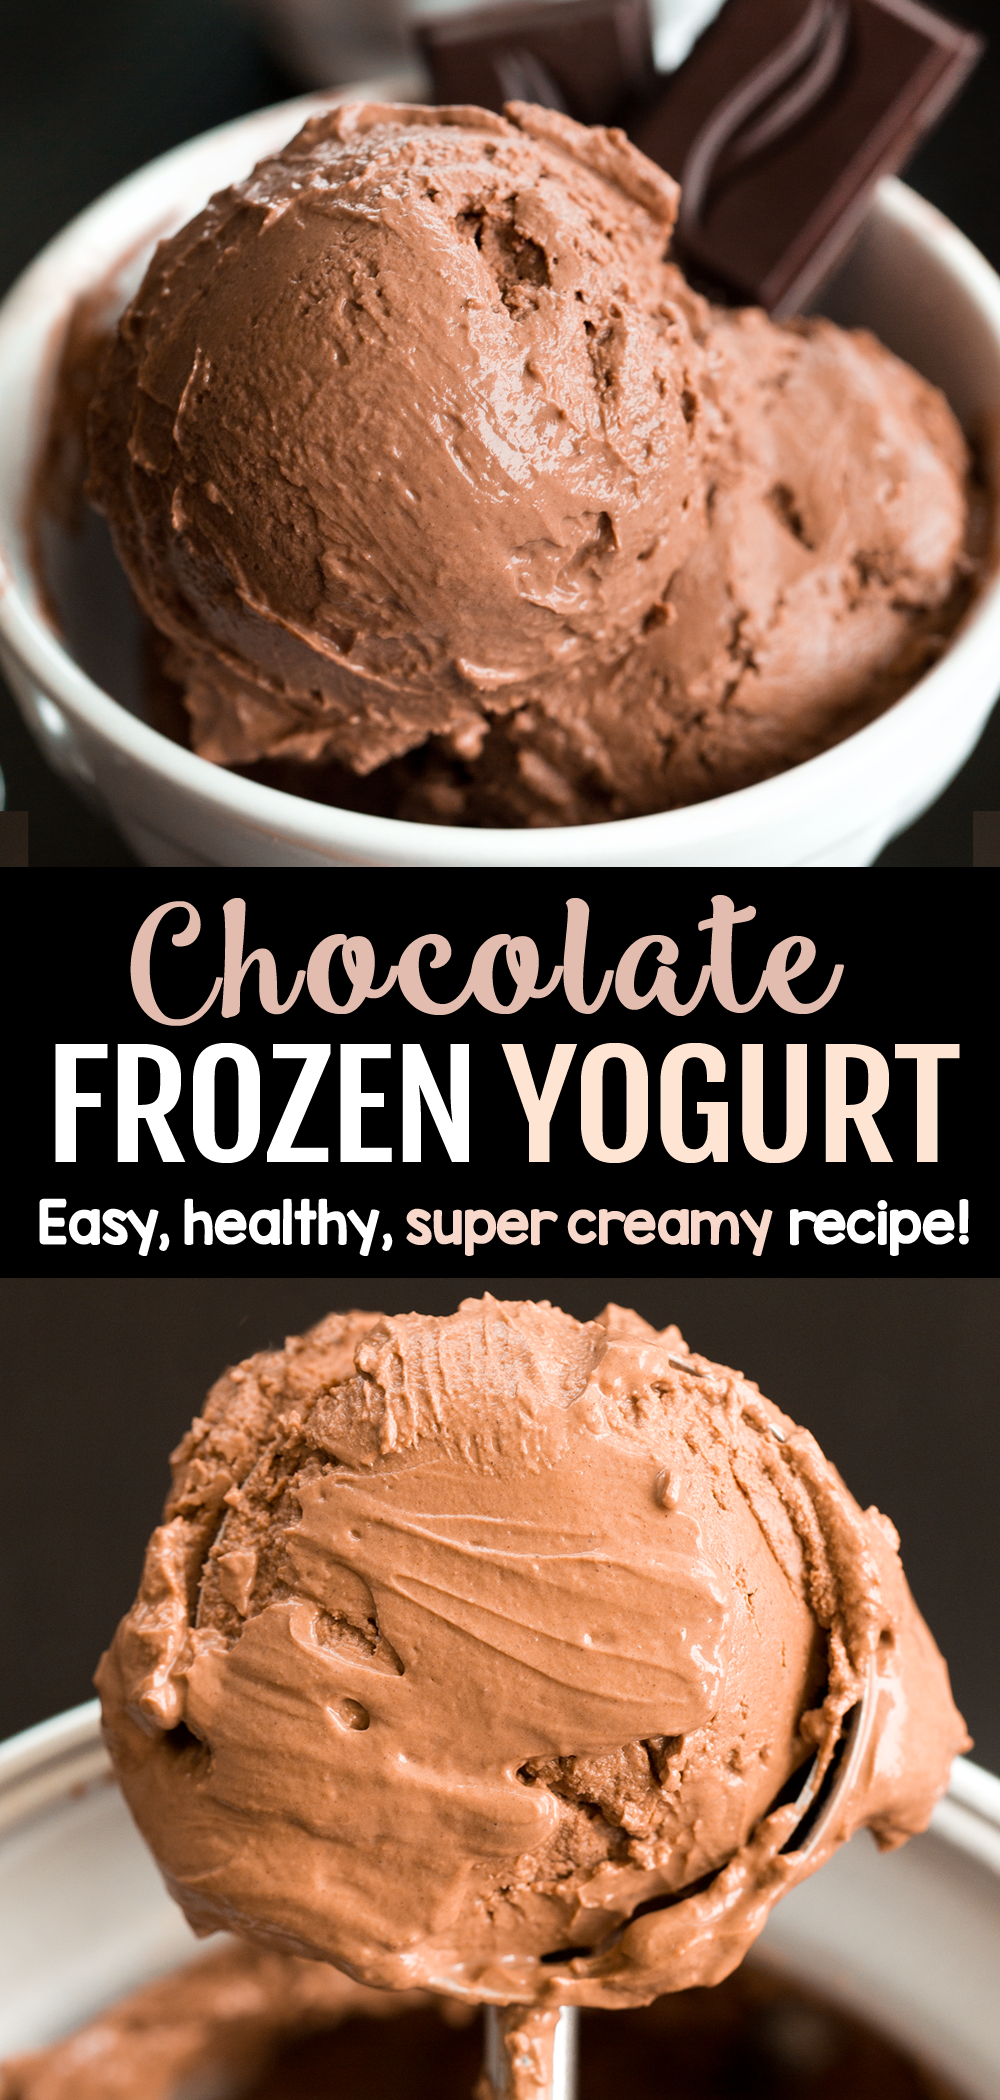 How To Make Chocolate Frozen Yogurt Healthy Dessert Recipe - Chocolate Frozen Yogurt - Creamy, Healthy Soft Serve Recipe!